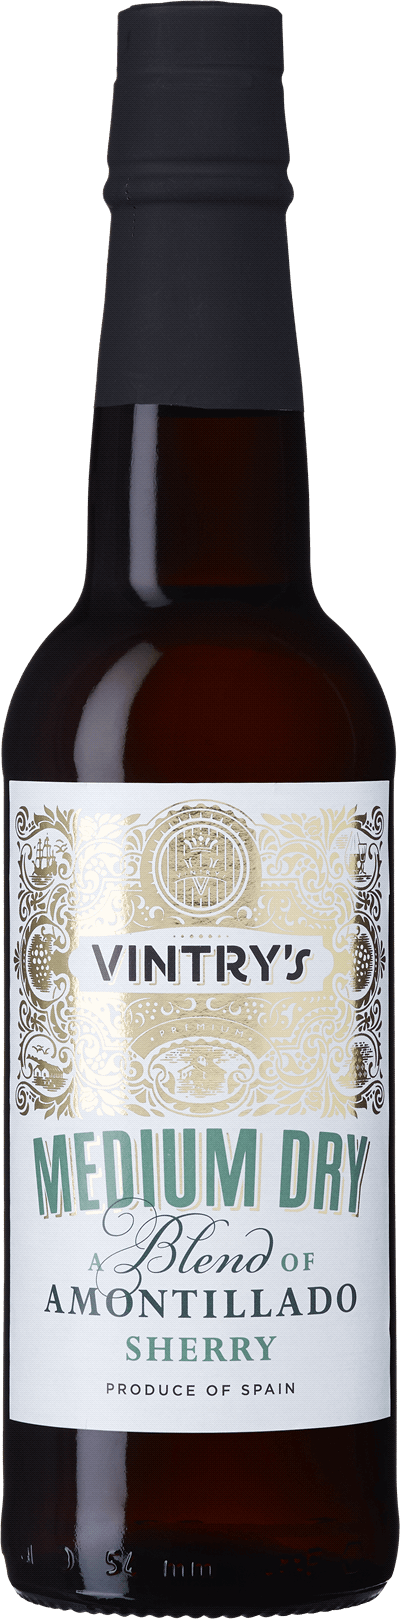 Vintry's Blend of Amontillado 